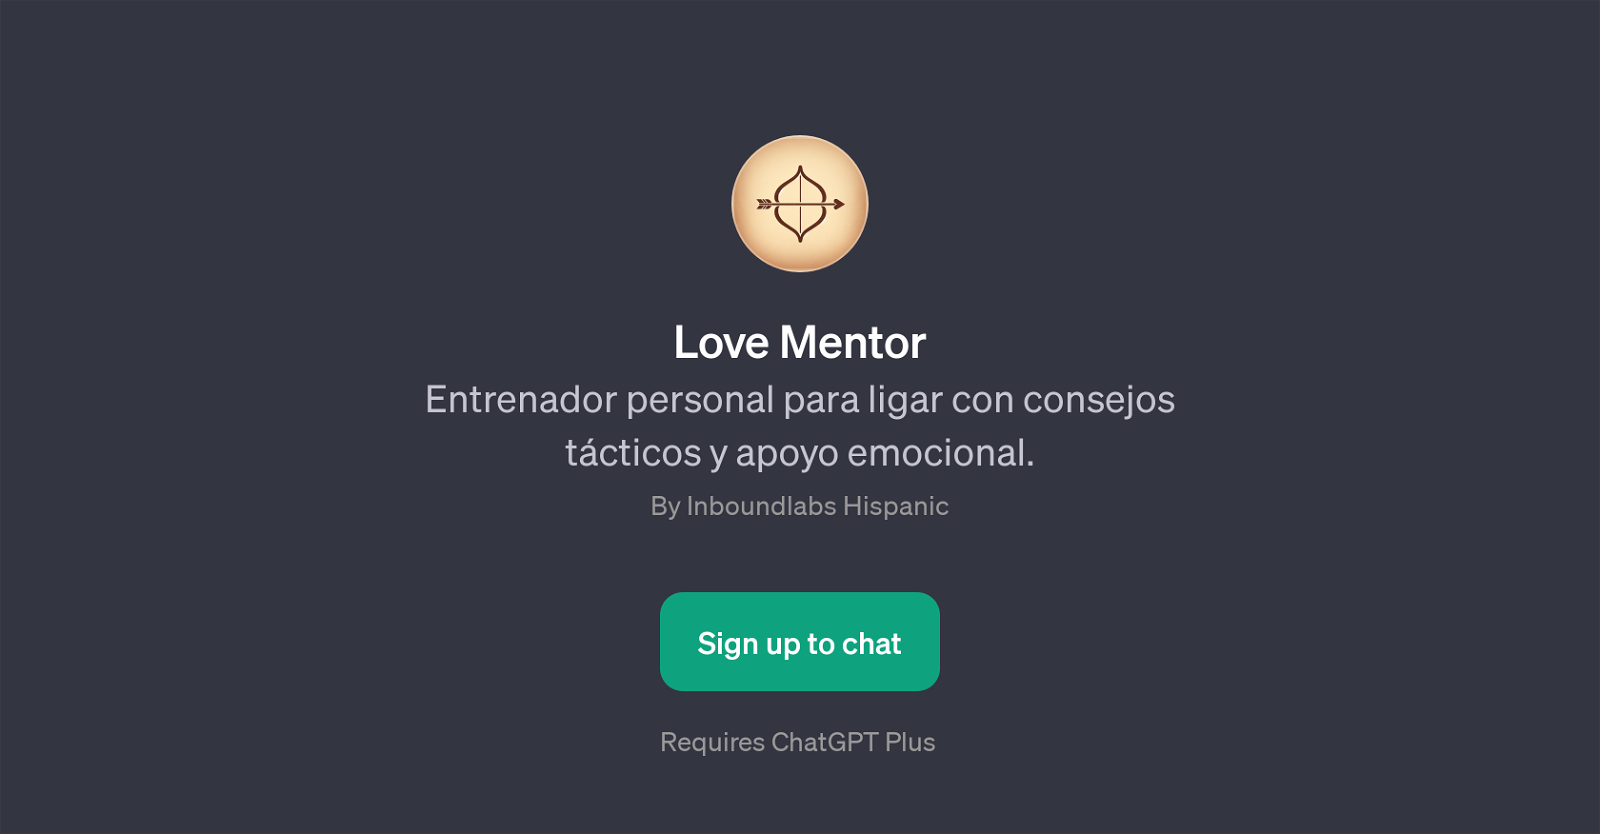 Love Mentor website